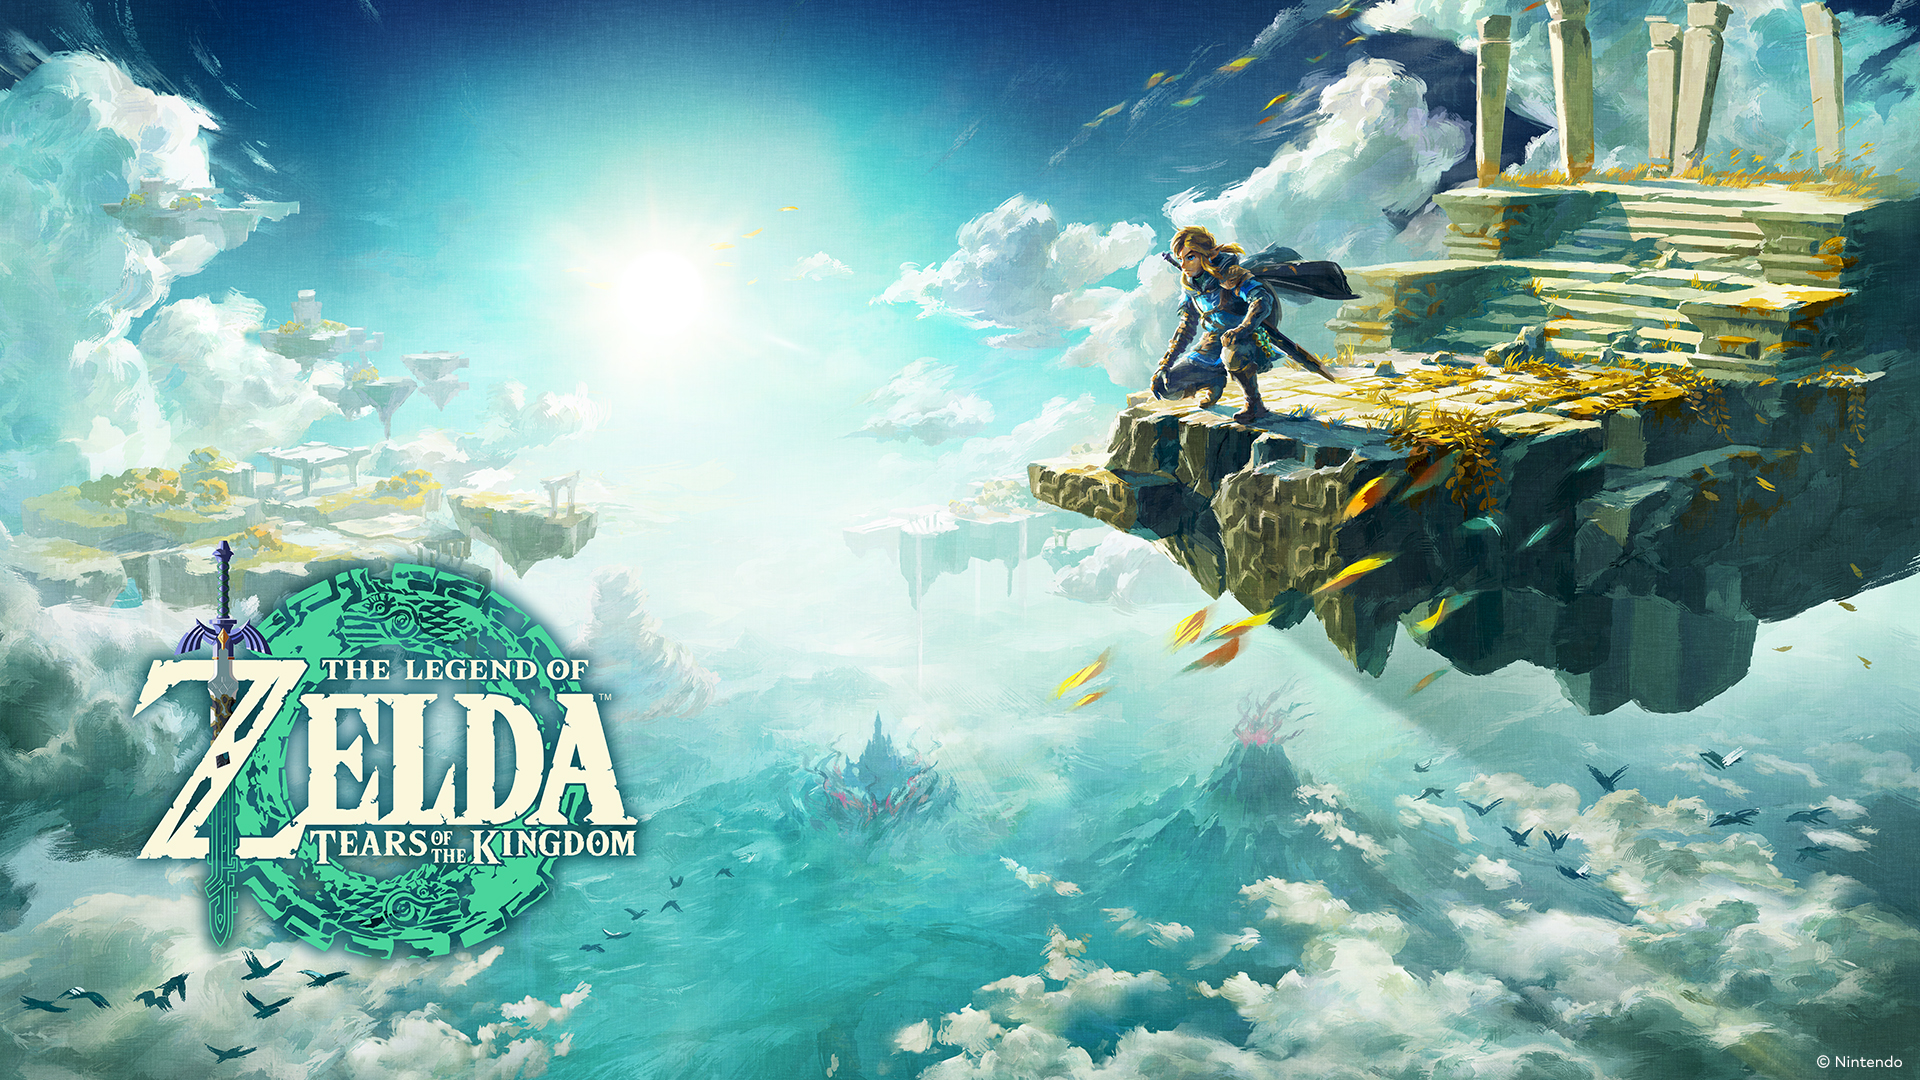 The Legend of Zelda Tears of the Kingdom Update Fixes Item Duplication Glitch